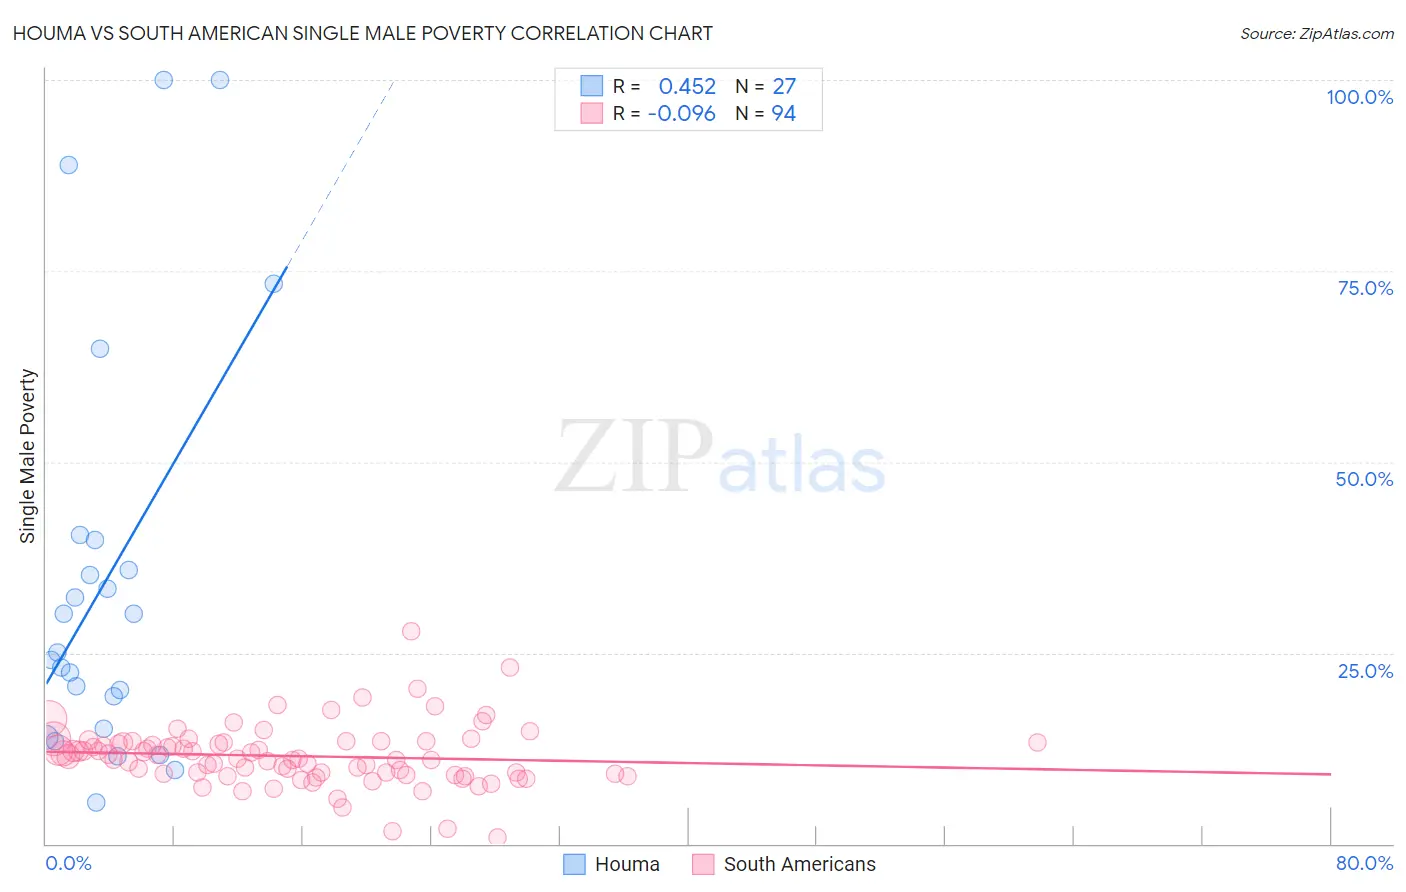 Houma vs South American Single Male Poverty